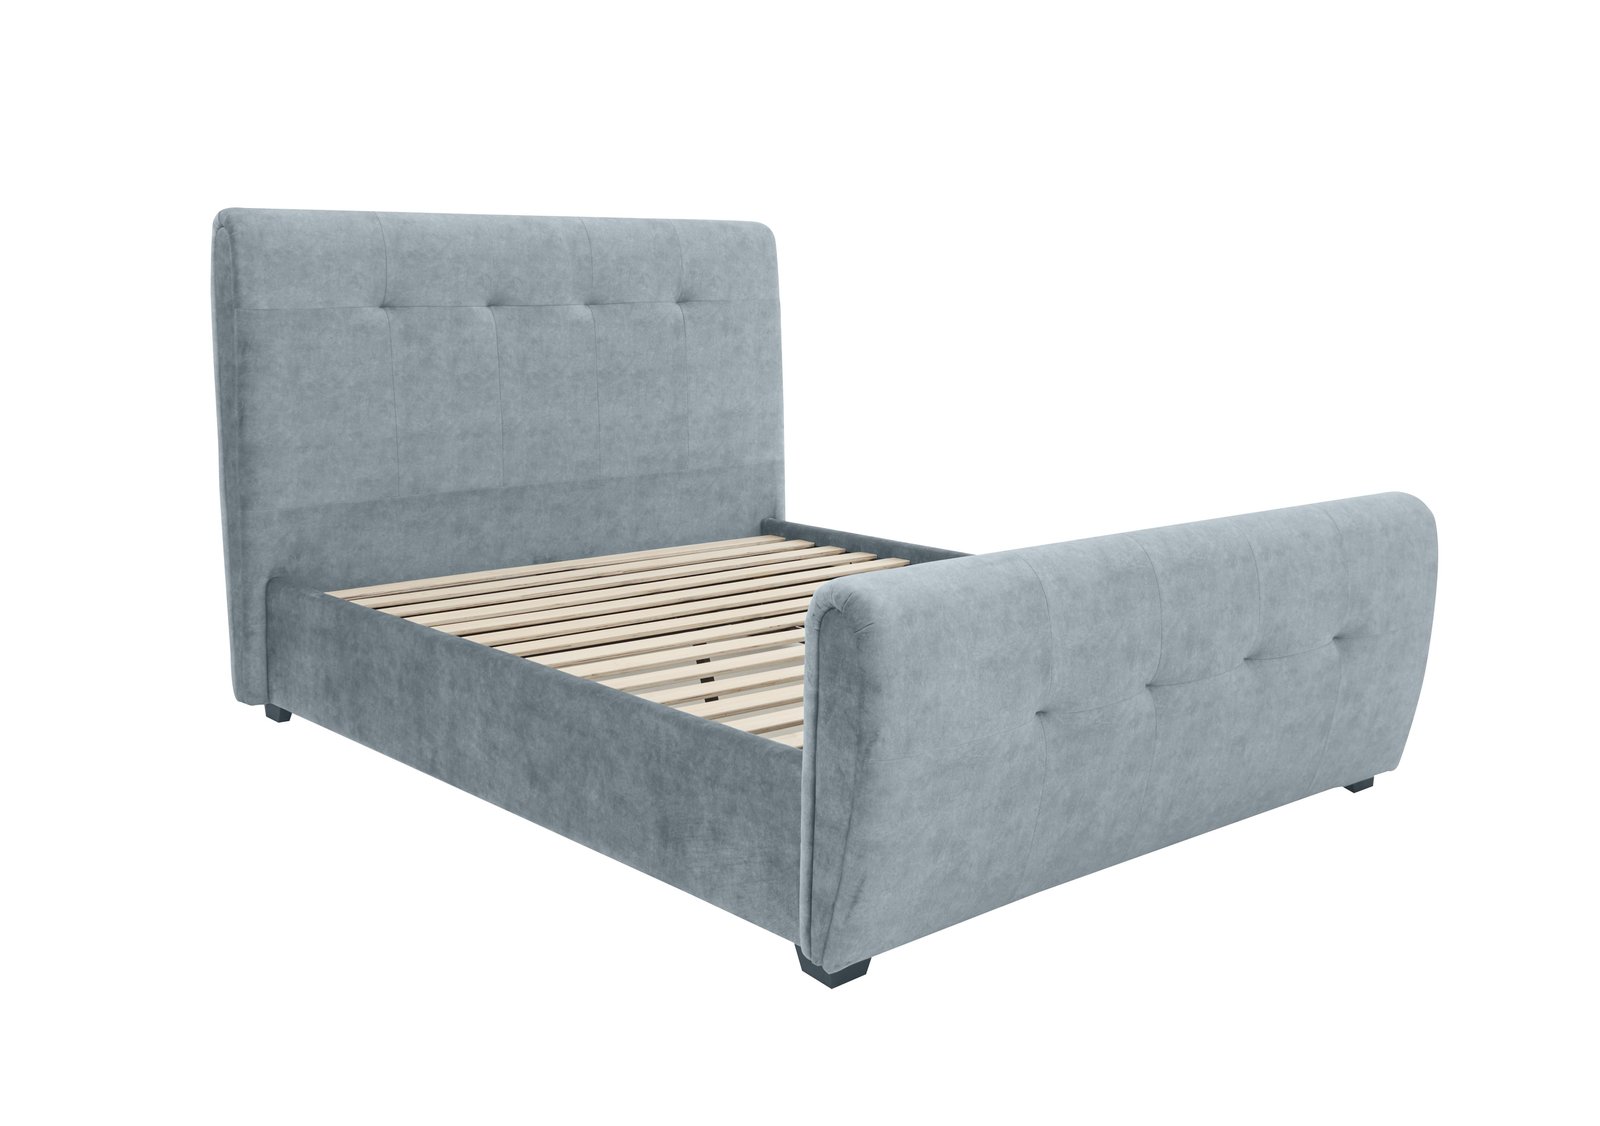 Tampa Brushed Velvet King Size Bed Frame - Limited Stock Available! in Velvet Sky 1688-19 on Furniture Village